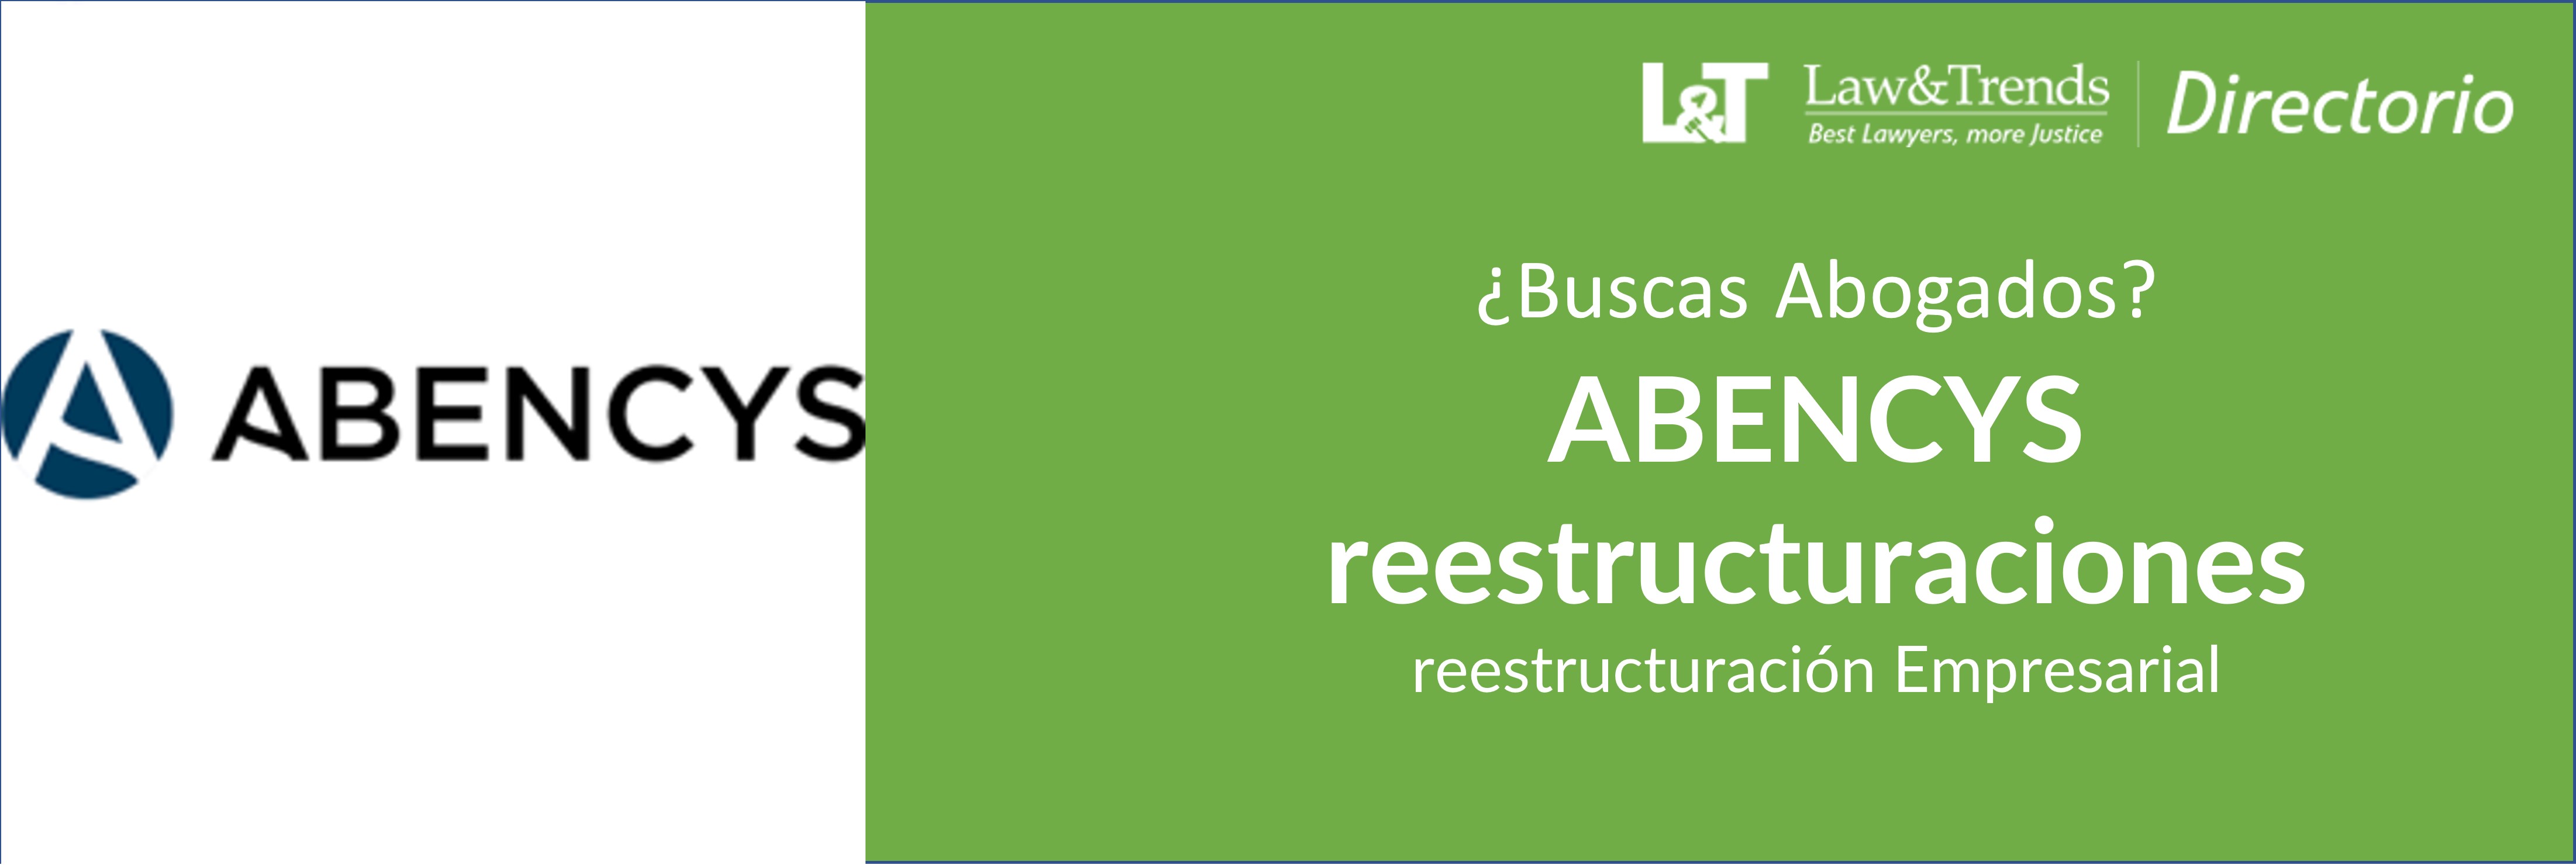 abencys-reestructuraciones Madrid
